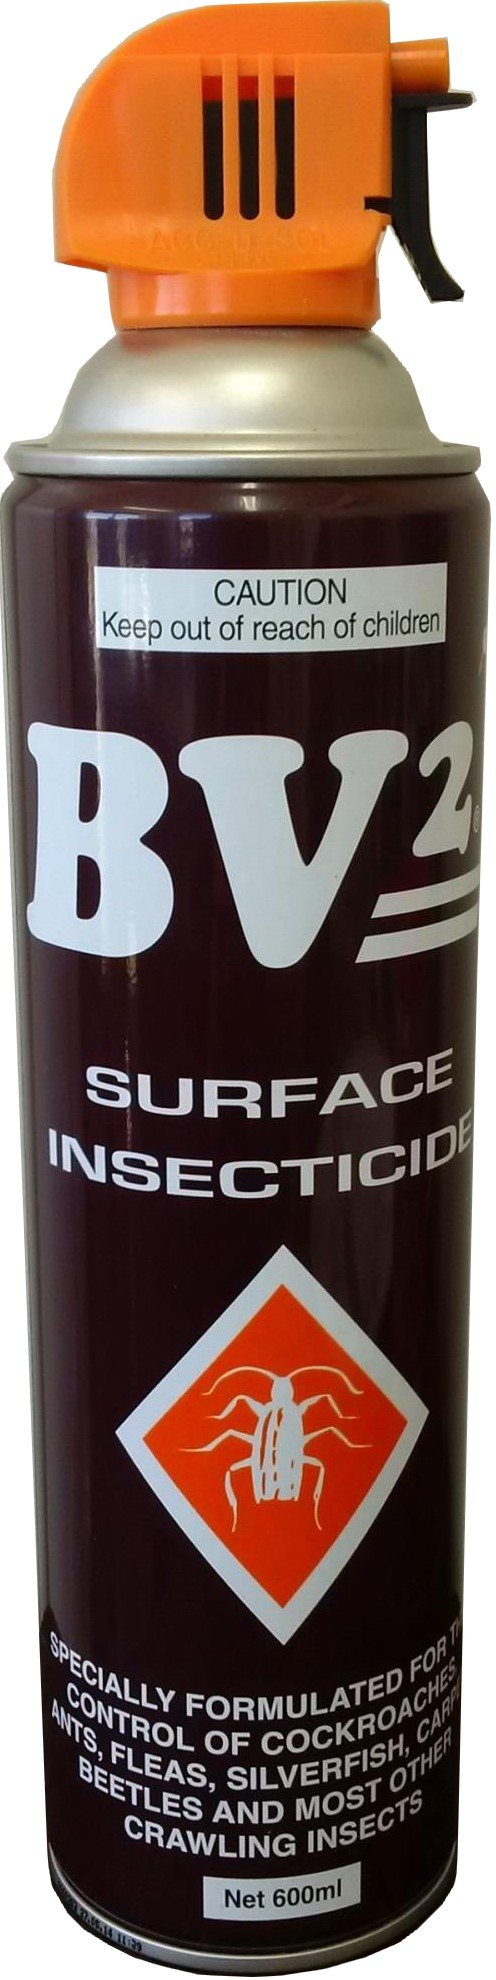 Insecticide - Aerosol 600ml BV2